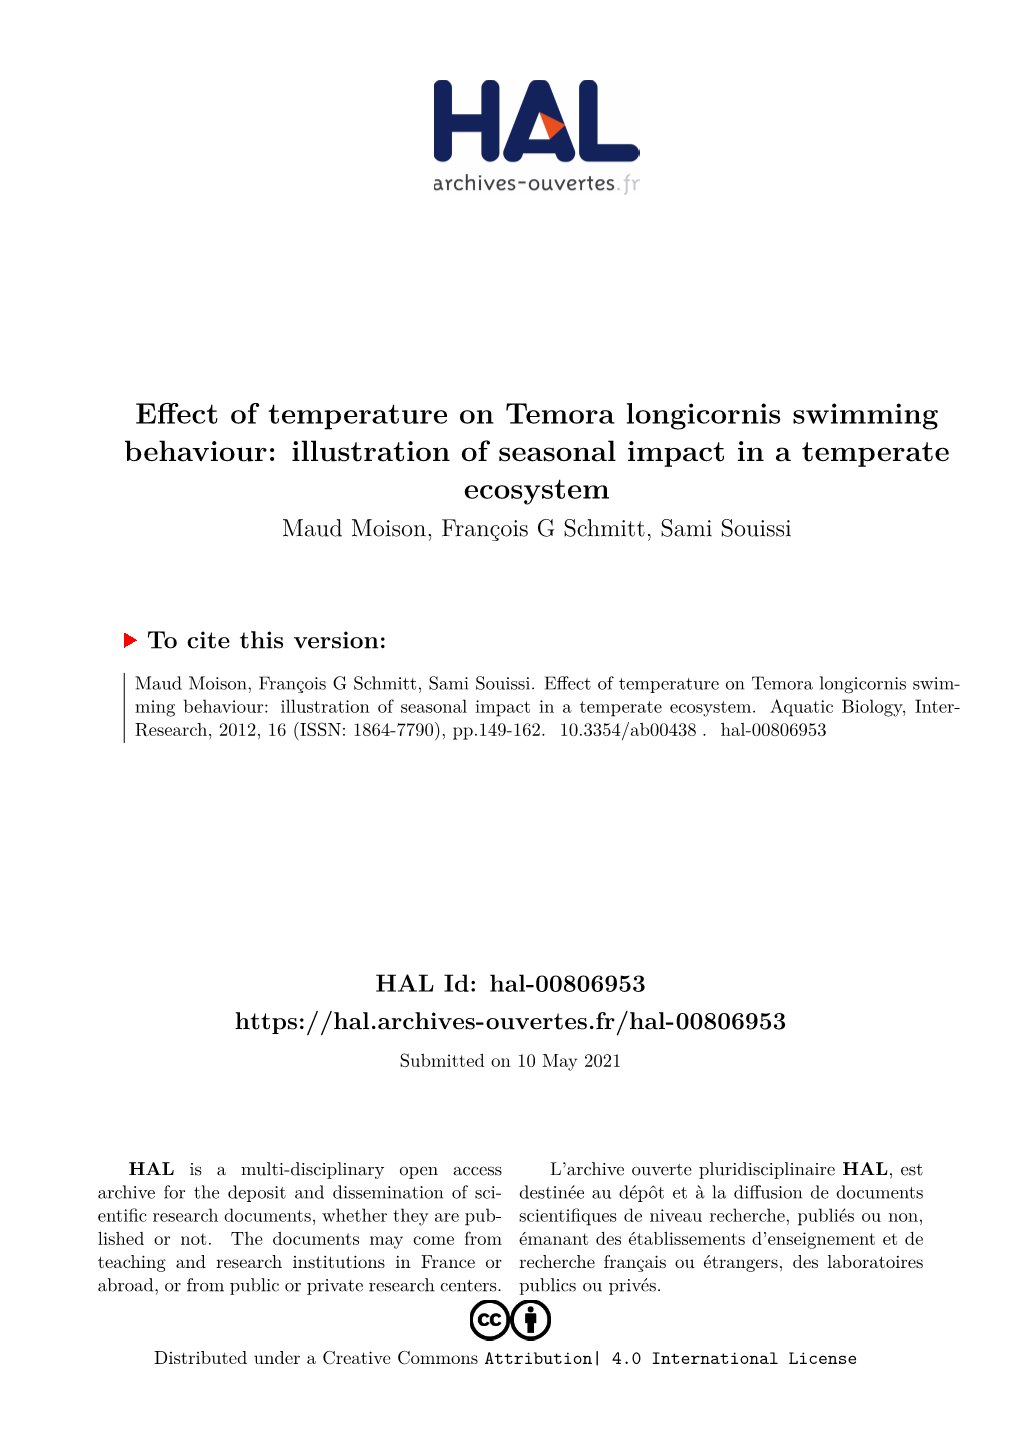 Effect of Temperature on Temora Longicornis Swimming Behaviour: Illustration of Seasonal Impact in a Temperate Ecosystem Maud Moison, François G Schmitt, Sami Souissi